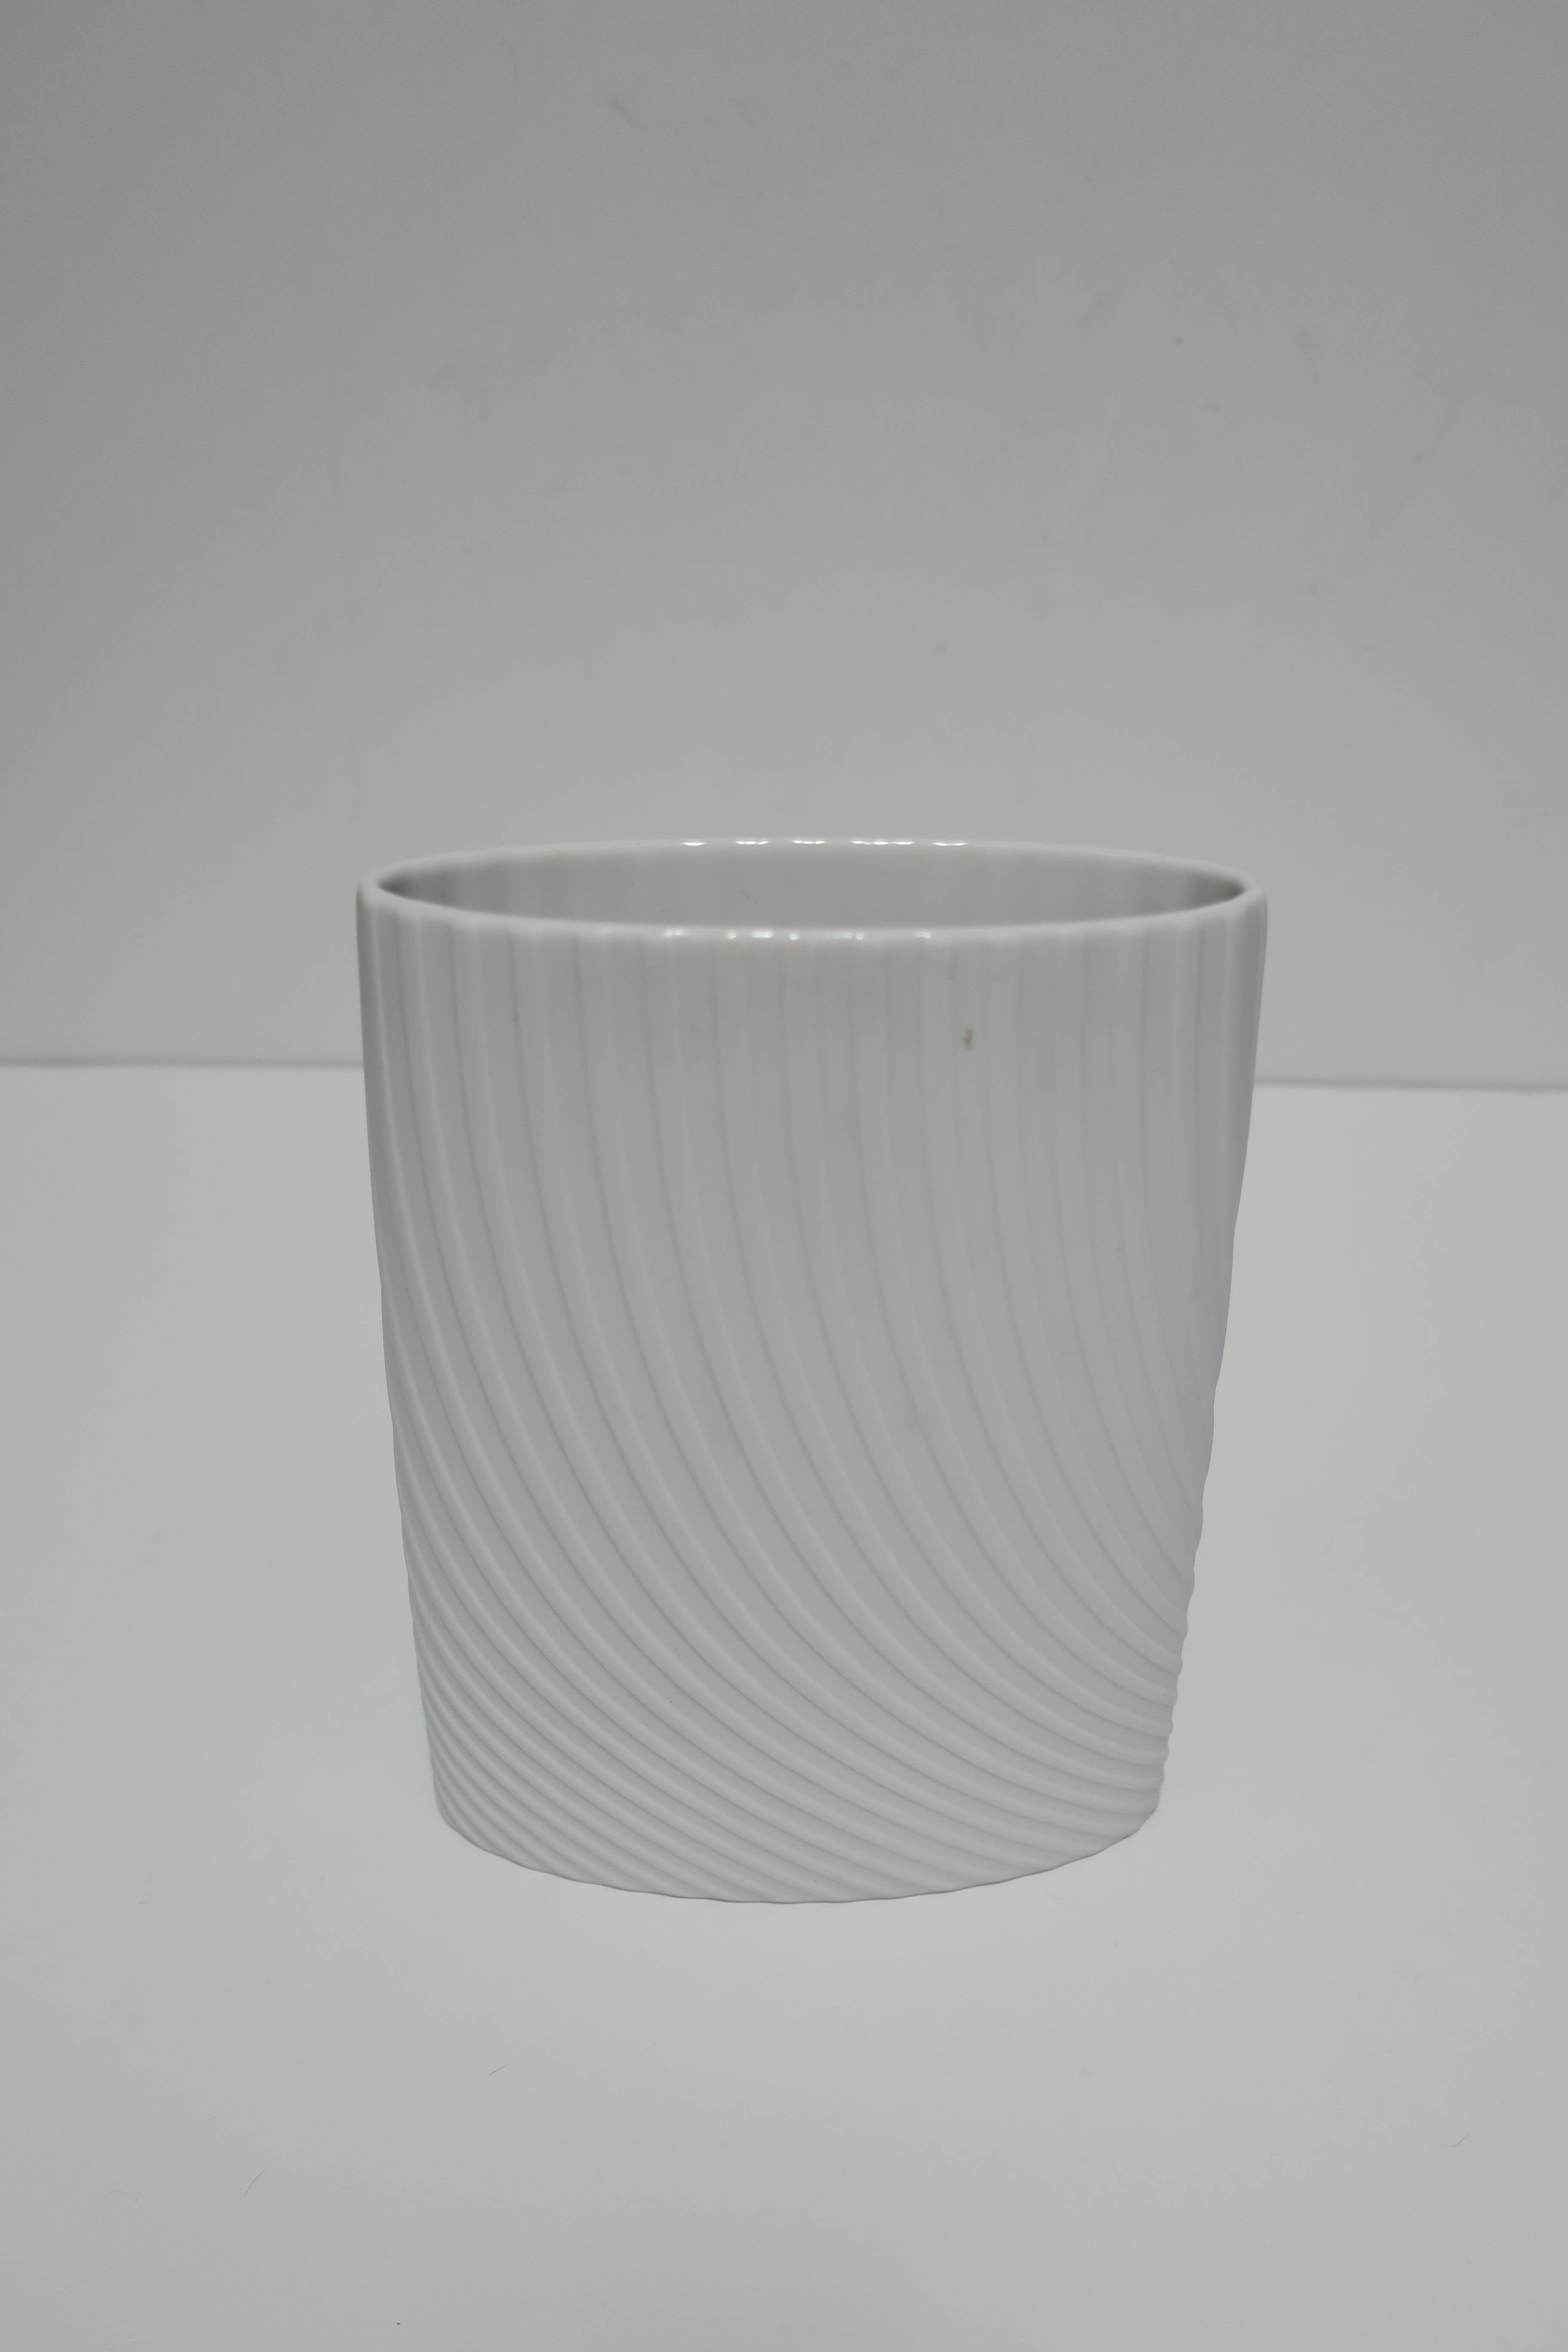 Designer White Matte Porcelain Vase by Rosenthal Studio-Line In Good Condition For Sale In New York, NY